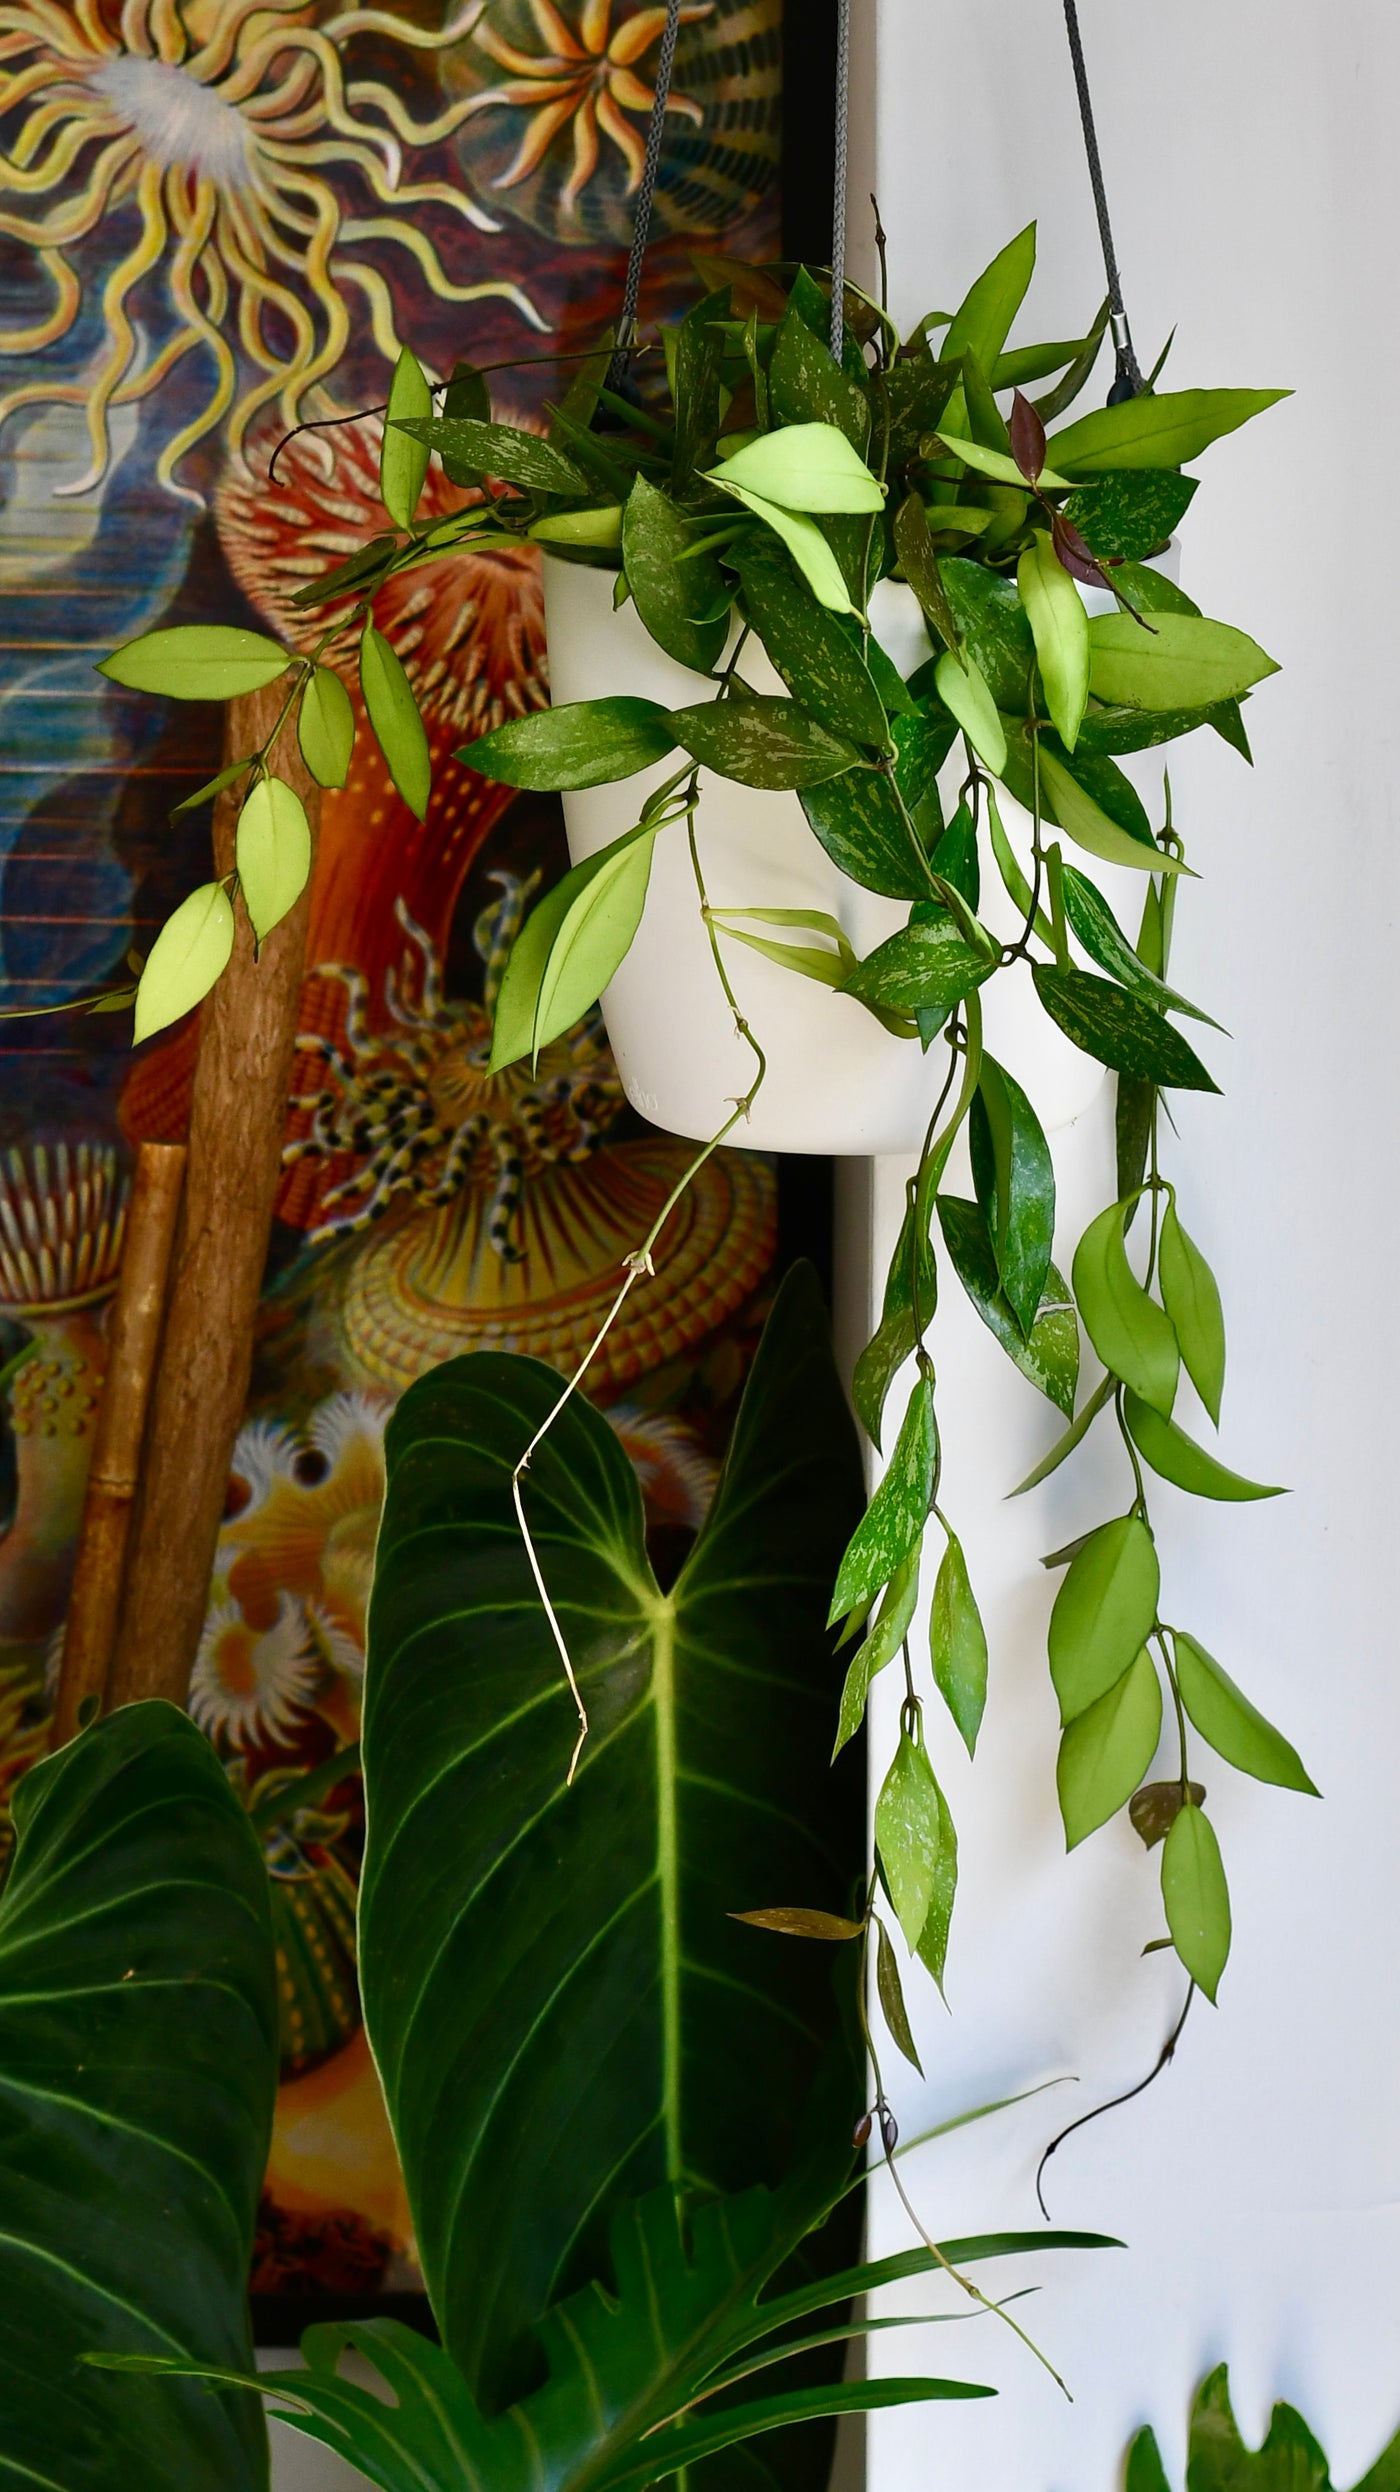 Hoya Pubicalyx 'Splash' (wax plants, wax vines, and wax flowers)